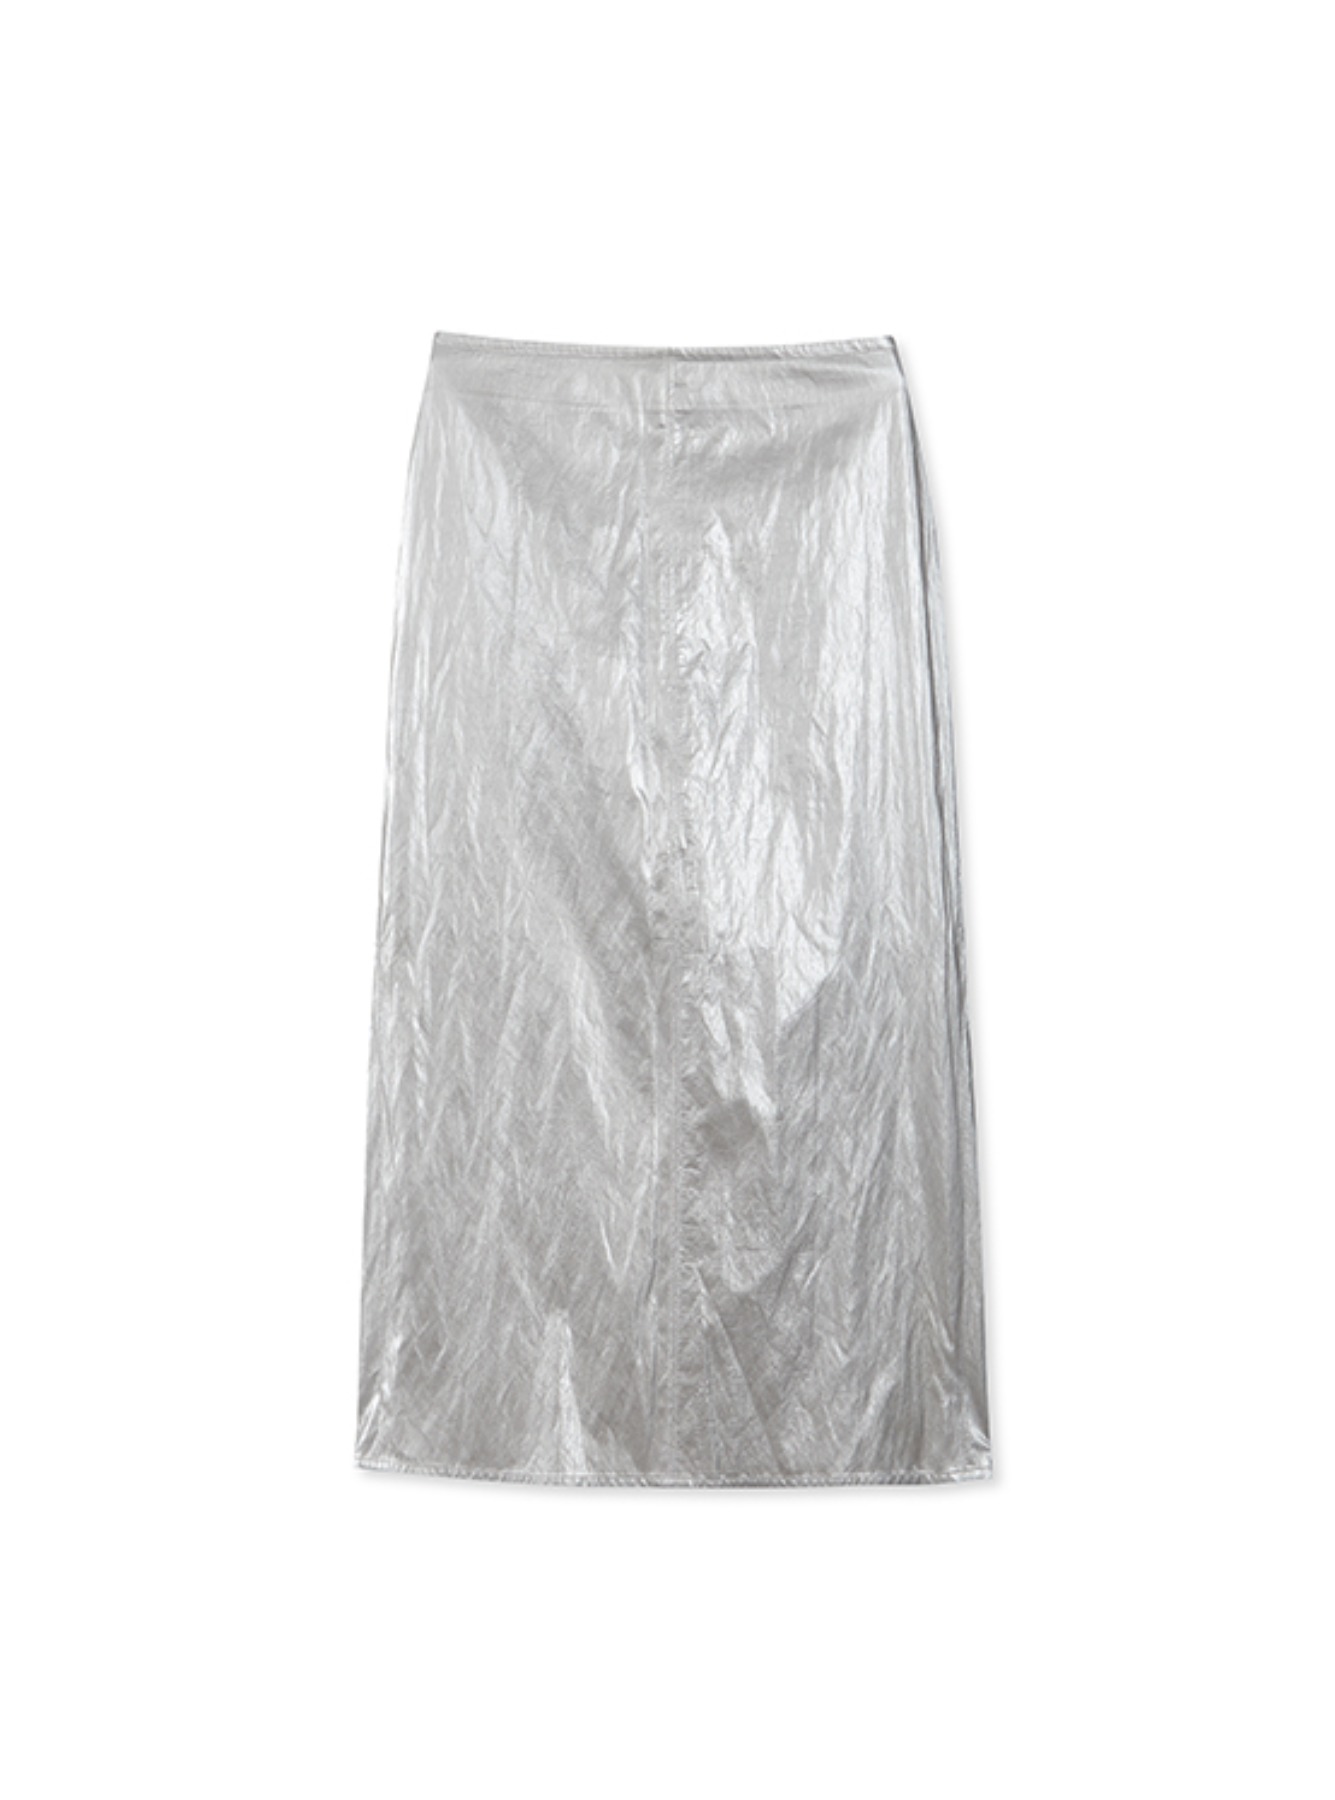 Metallic Skirt in Silver VW3SS092-15